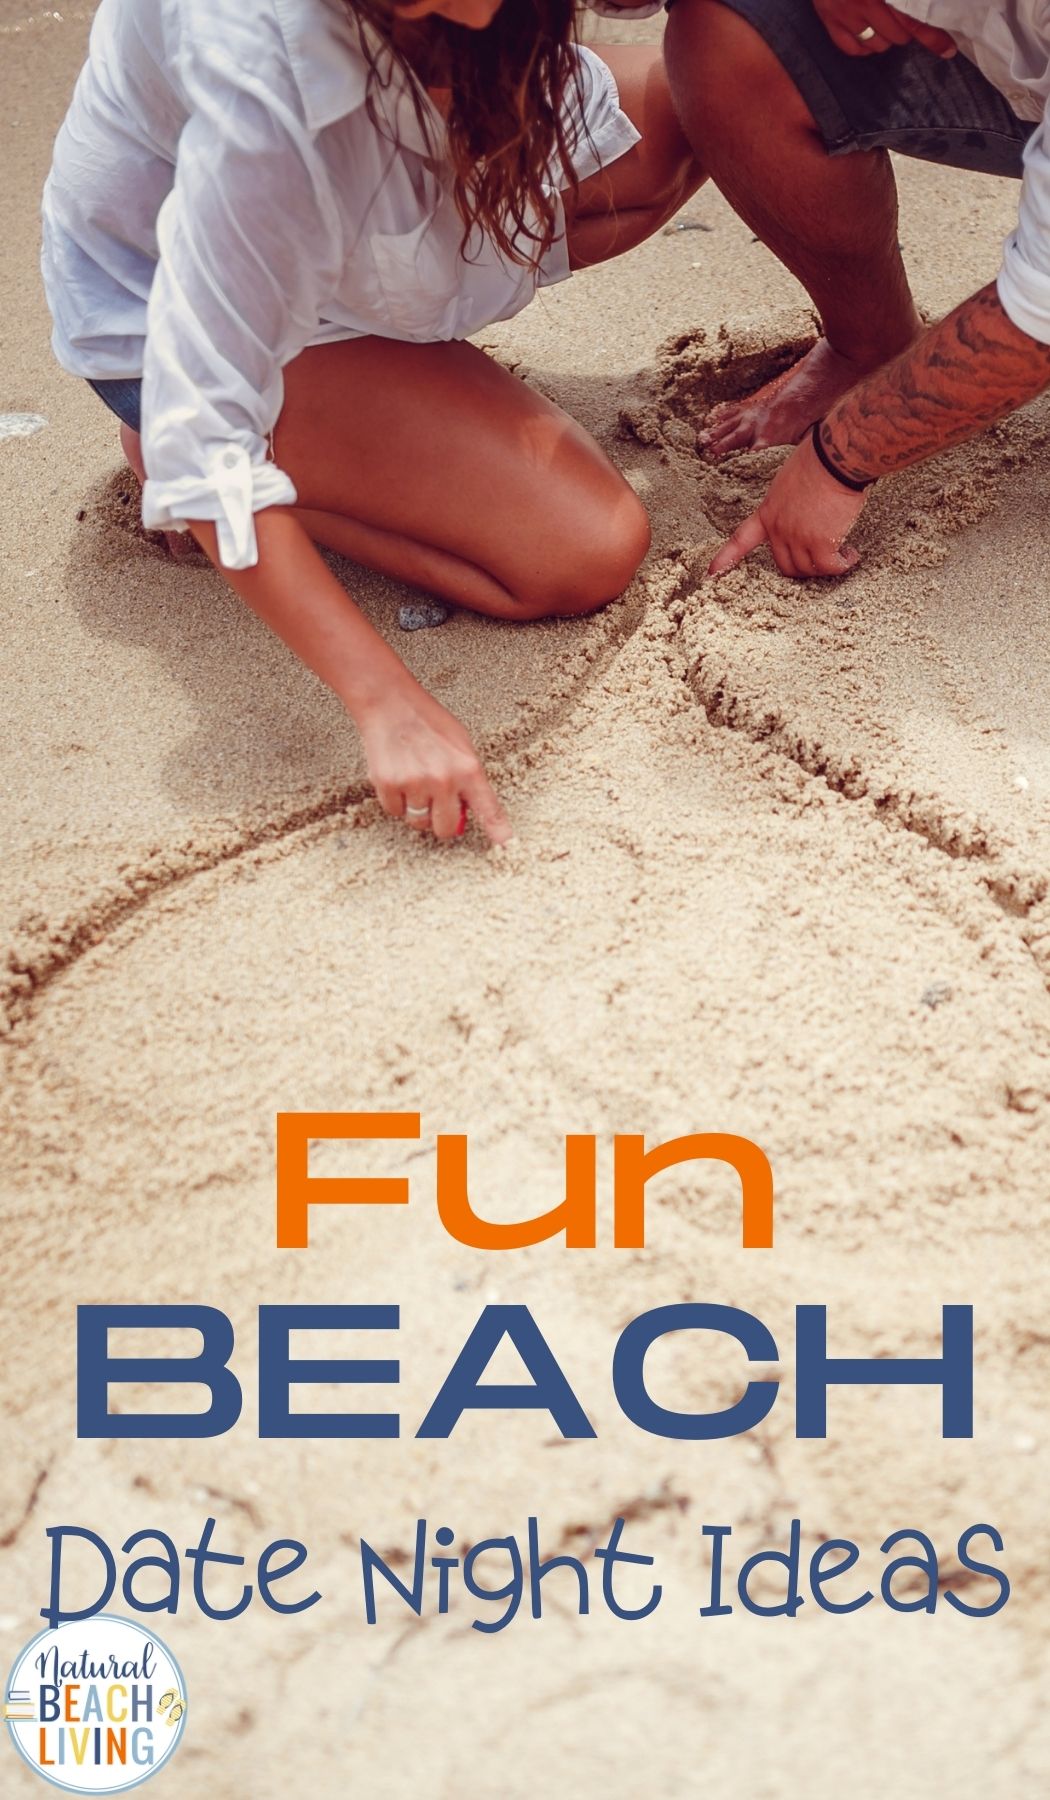 Fun Date Night Ideas for Fall - Natural Beach Living